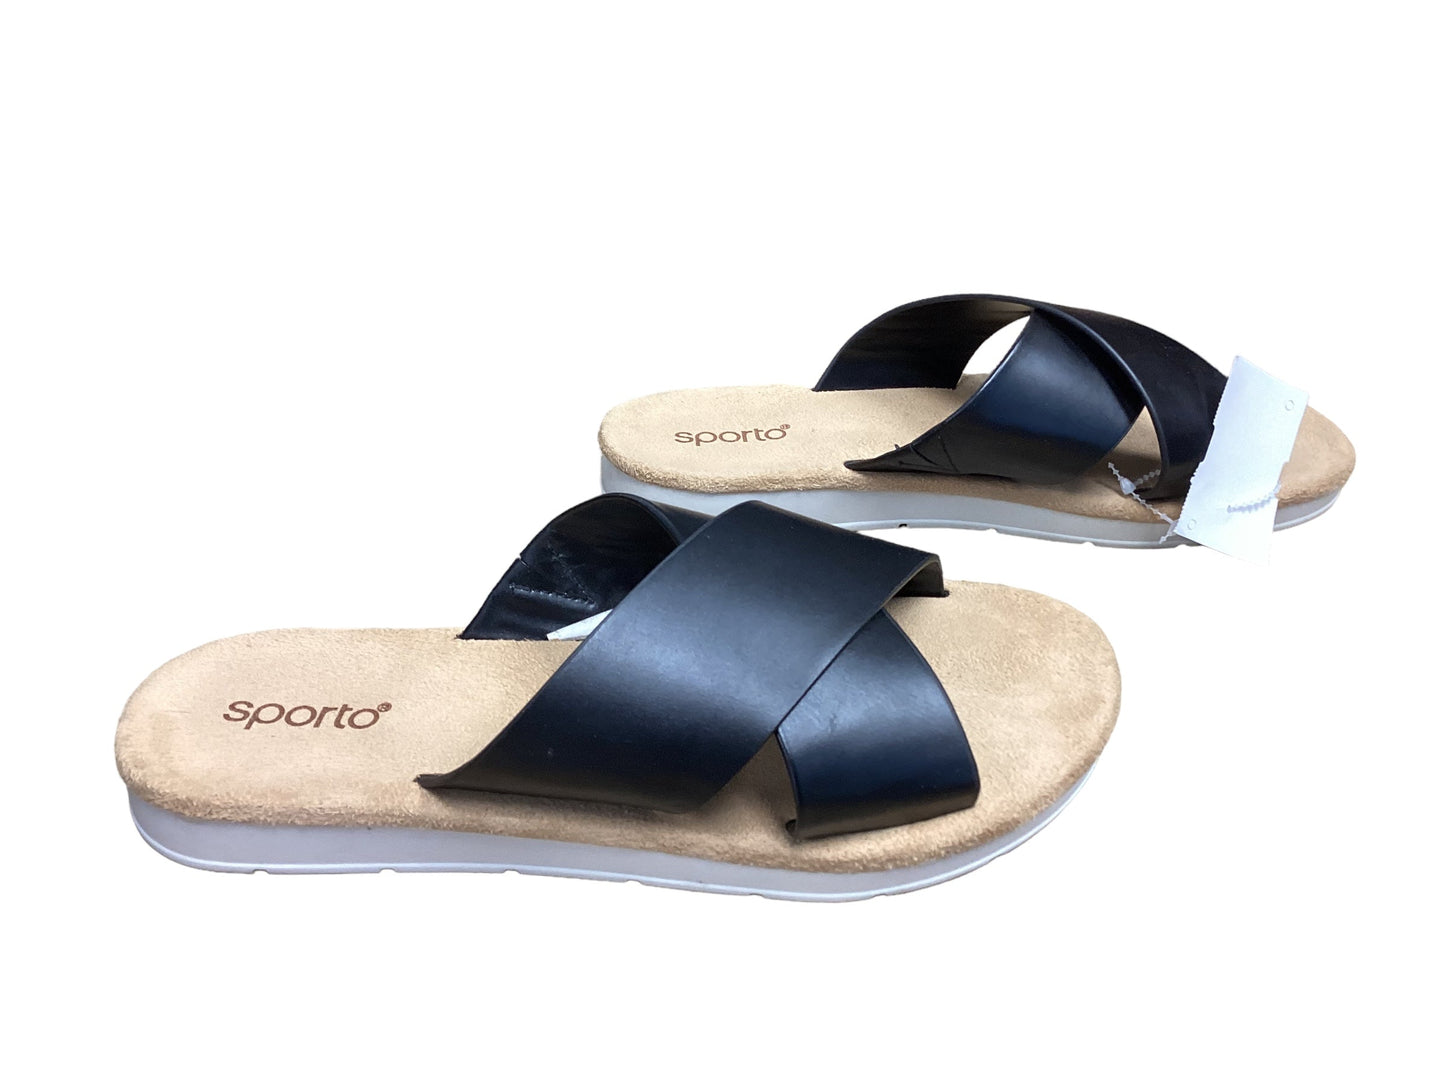 Black Sandals Flats Sporto, Size 8